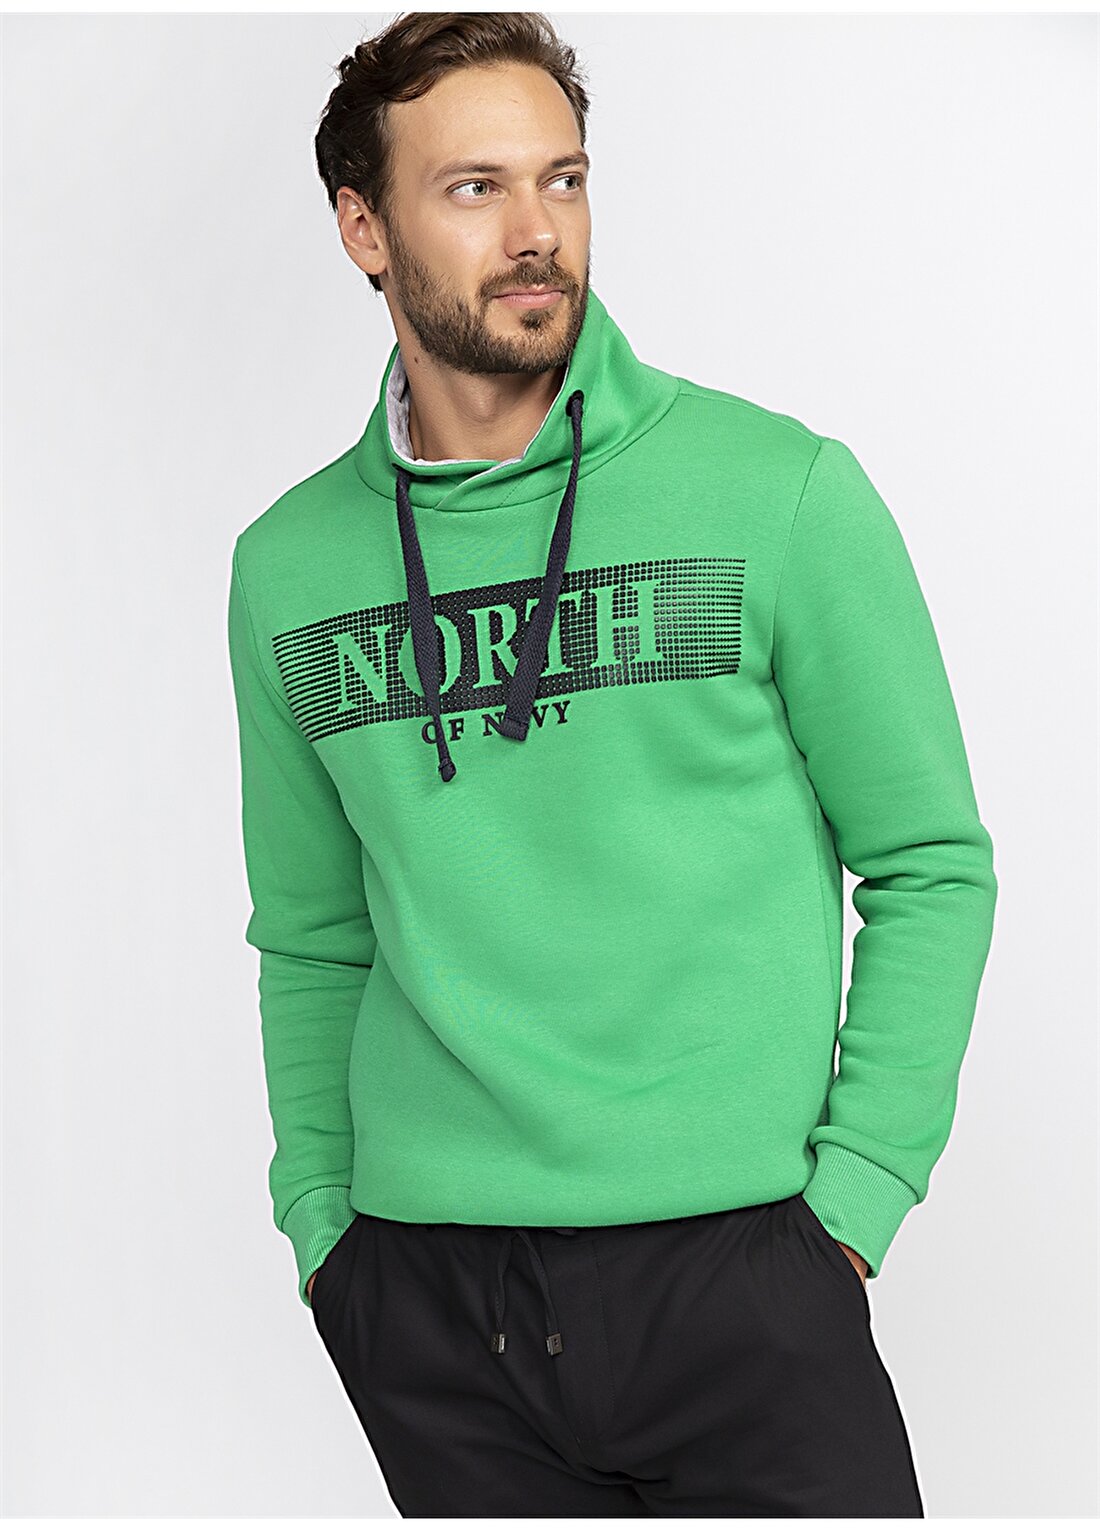 North Of Navy Yeşil Sweatshirt